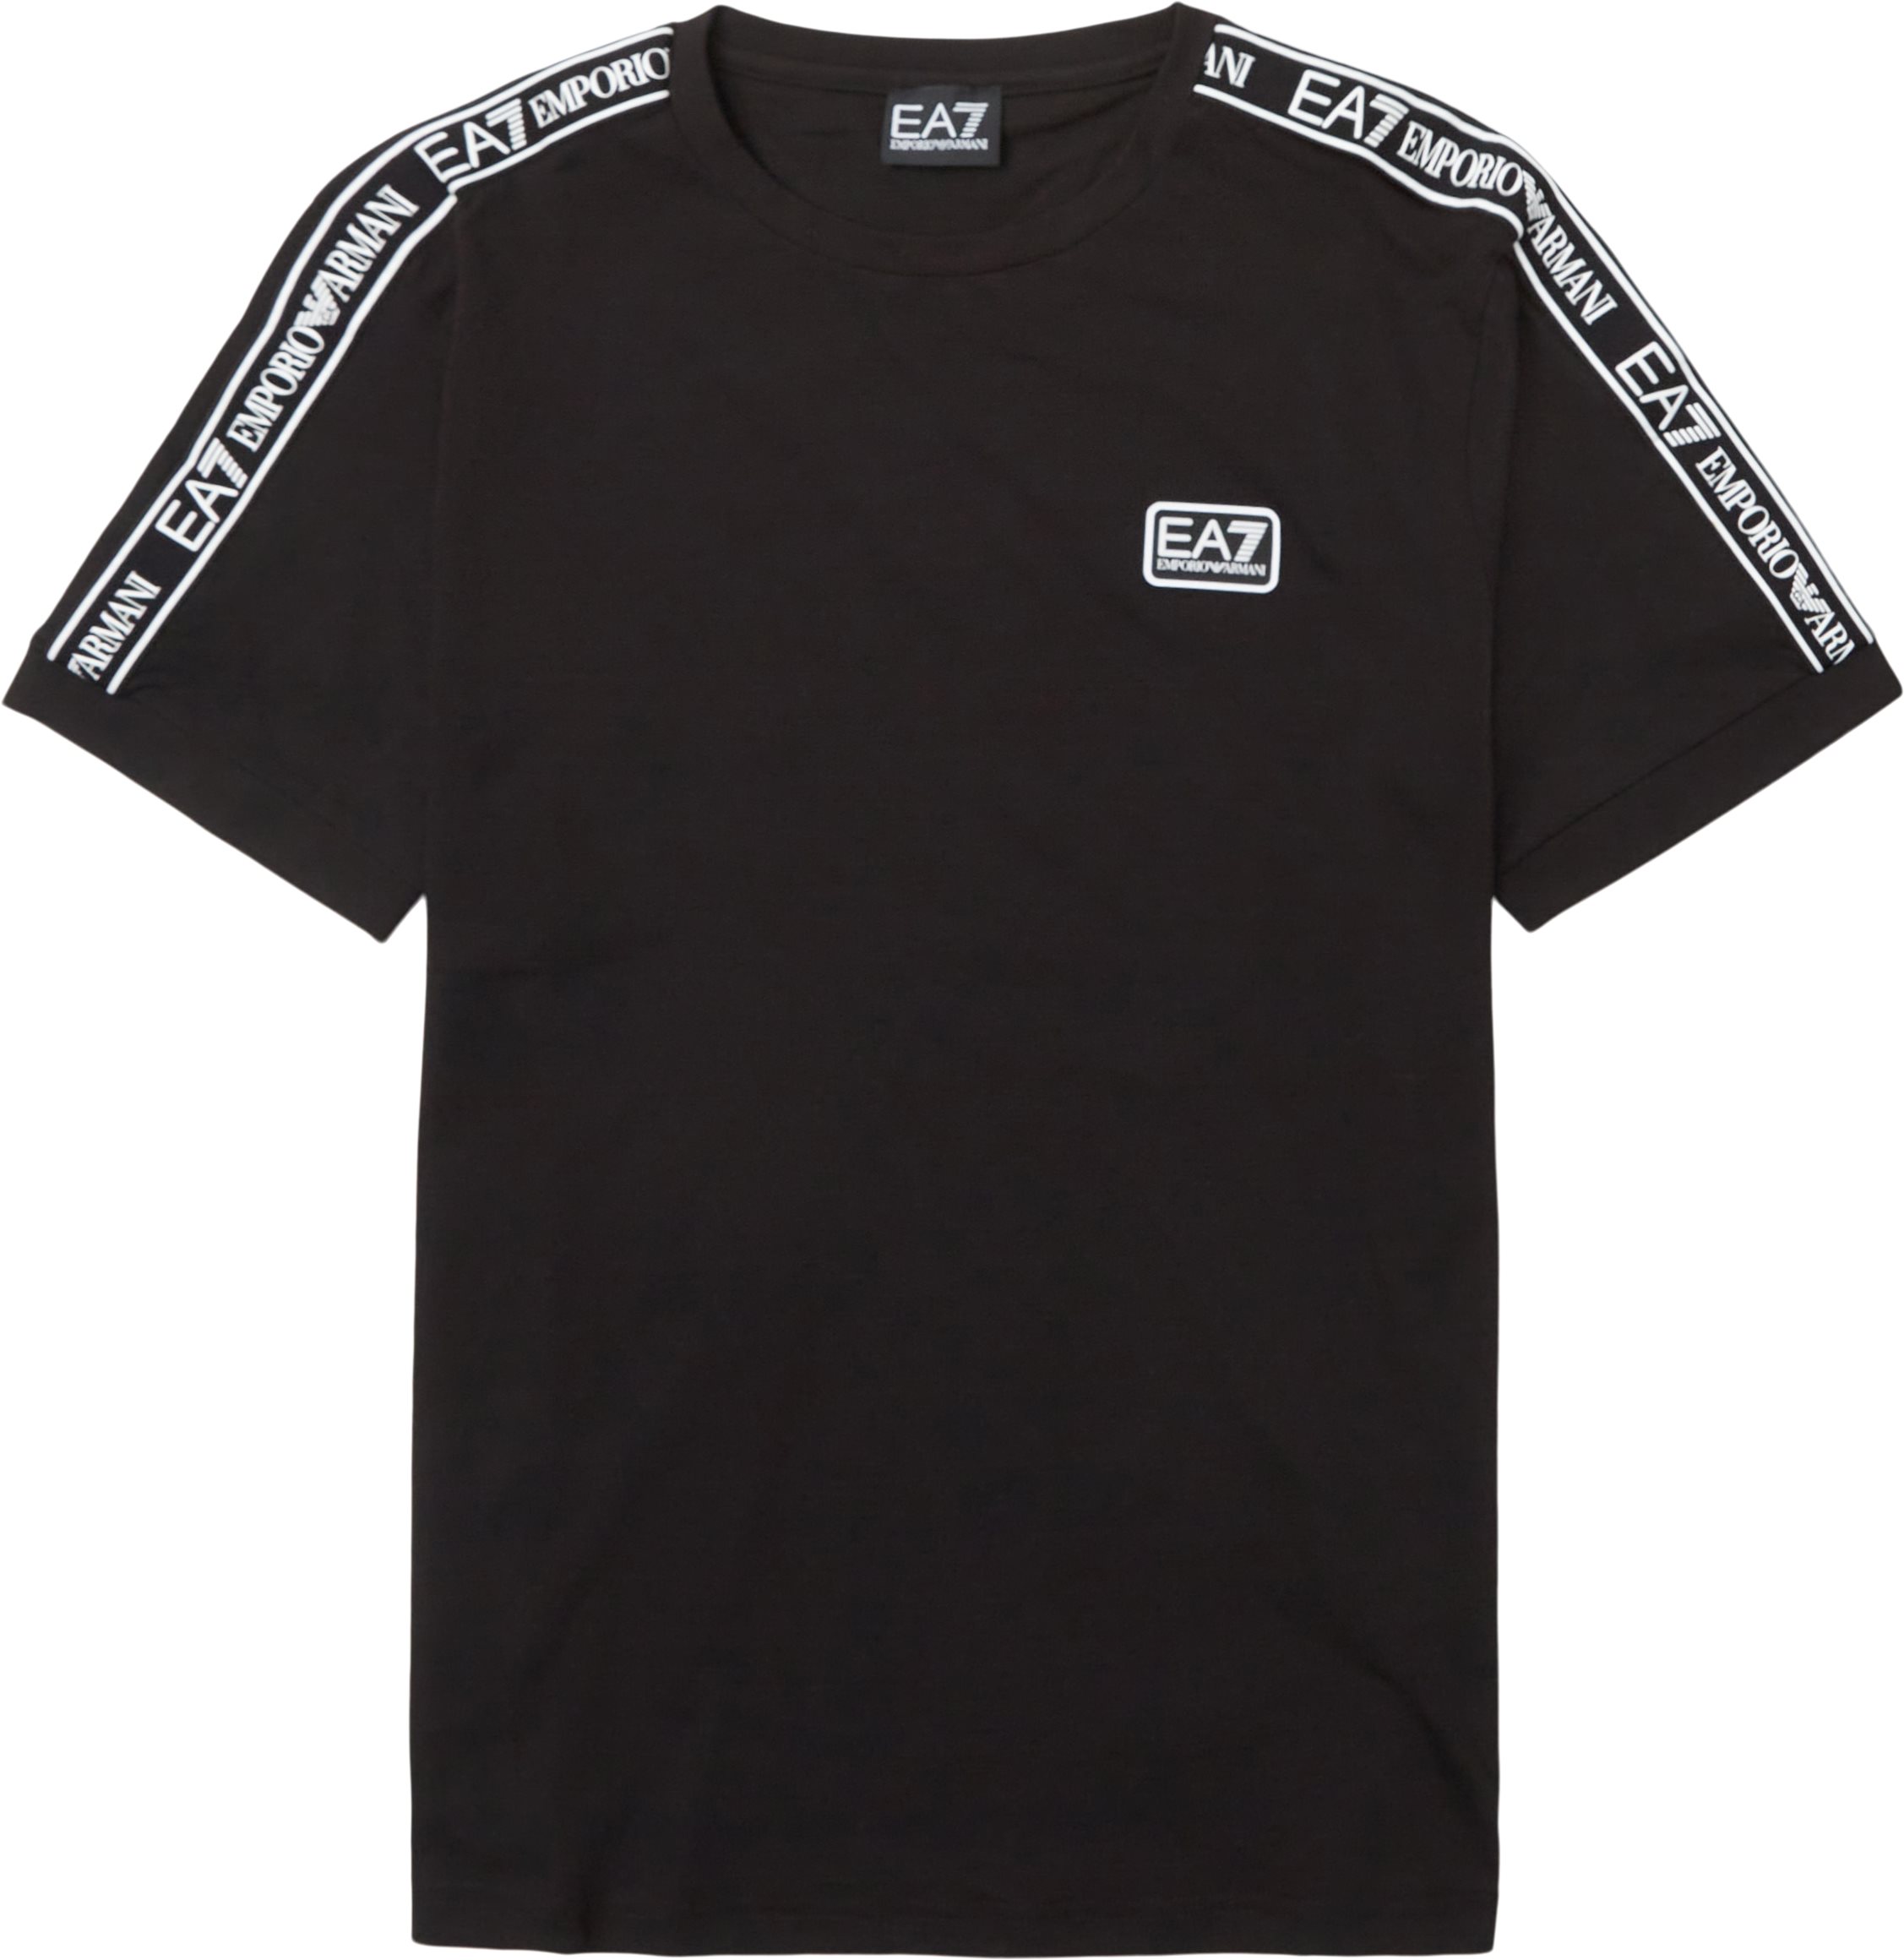 Pjo2z-3lpt18 - T-shirts - Regular fit - Black